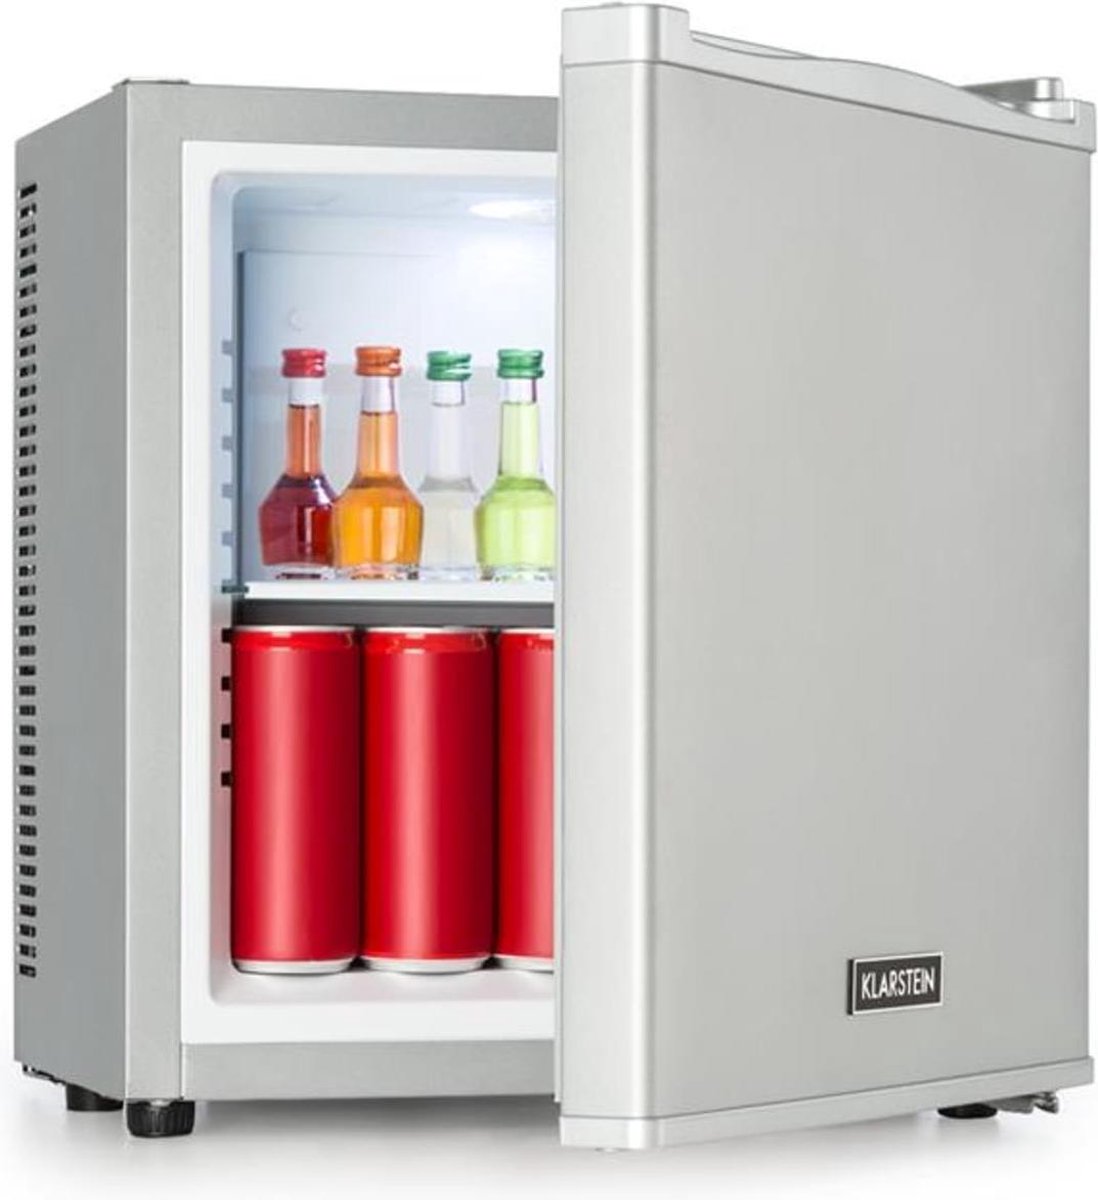 Klarstein Secret Cool Mini-koelkast - Minibar - Energielabel G - 13 Liter - 45 cm hoog - 2 Etages - 22 dB - Koelbereik: 5 - 8°C - Vrijstaand - Drankkoelkast - Zilver (4060656155147)